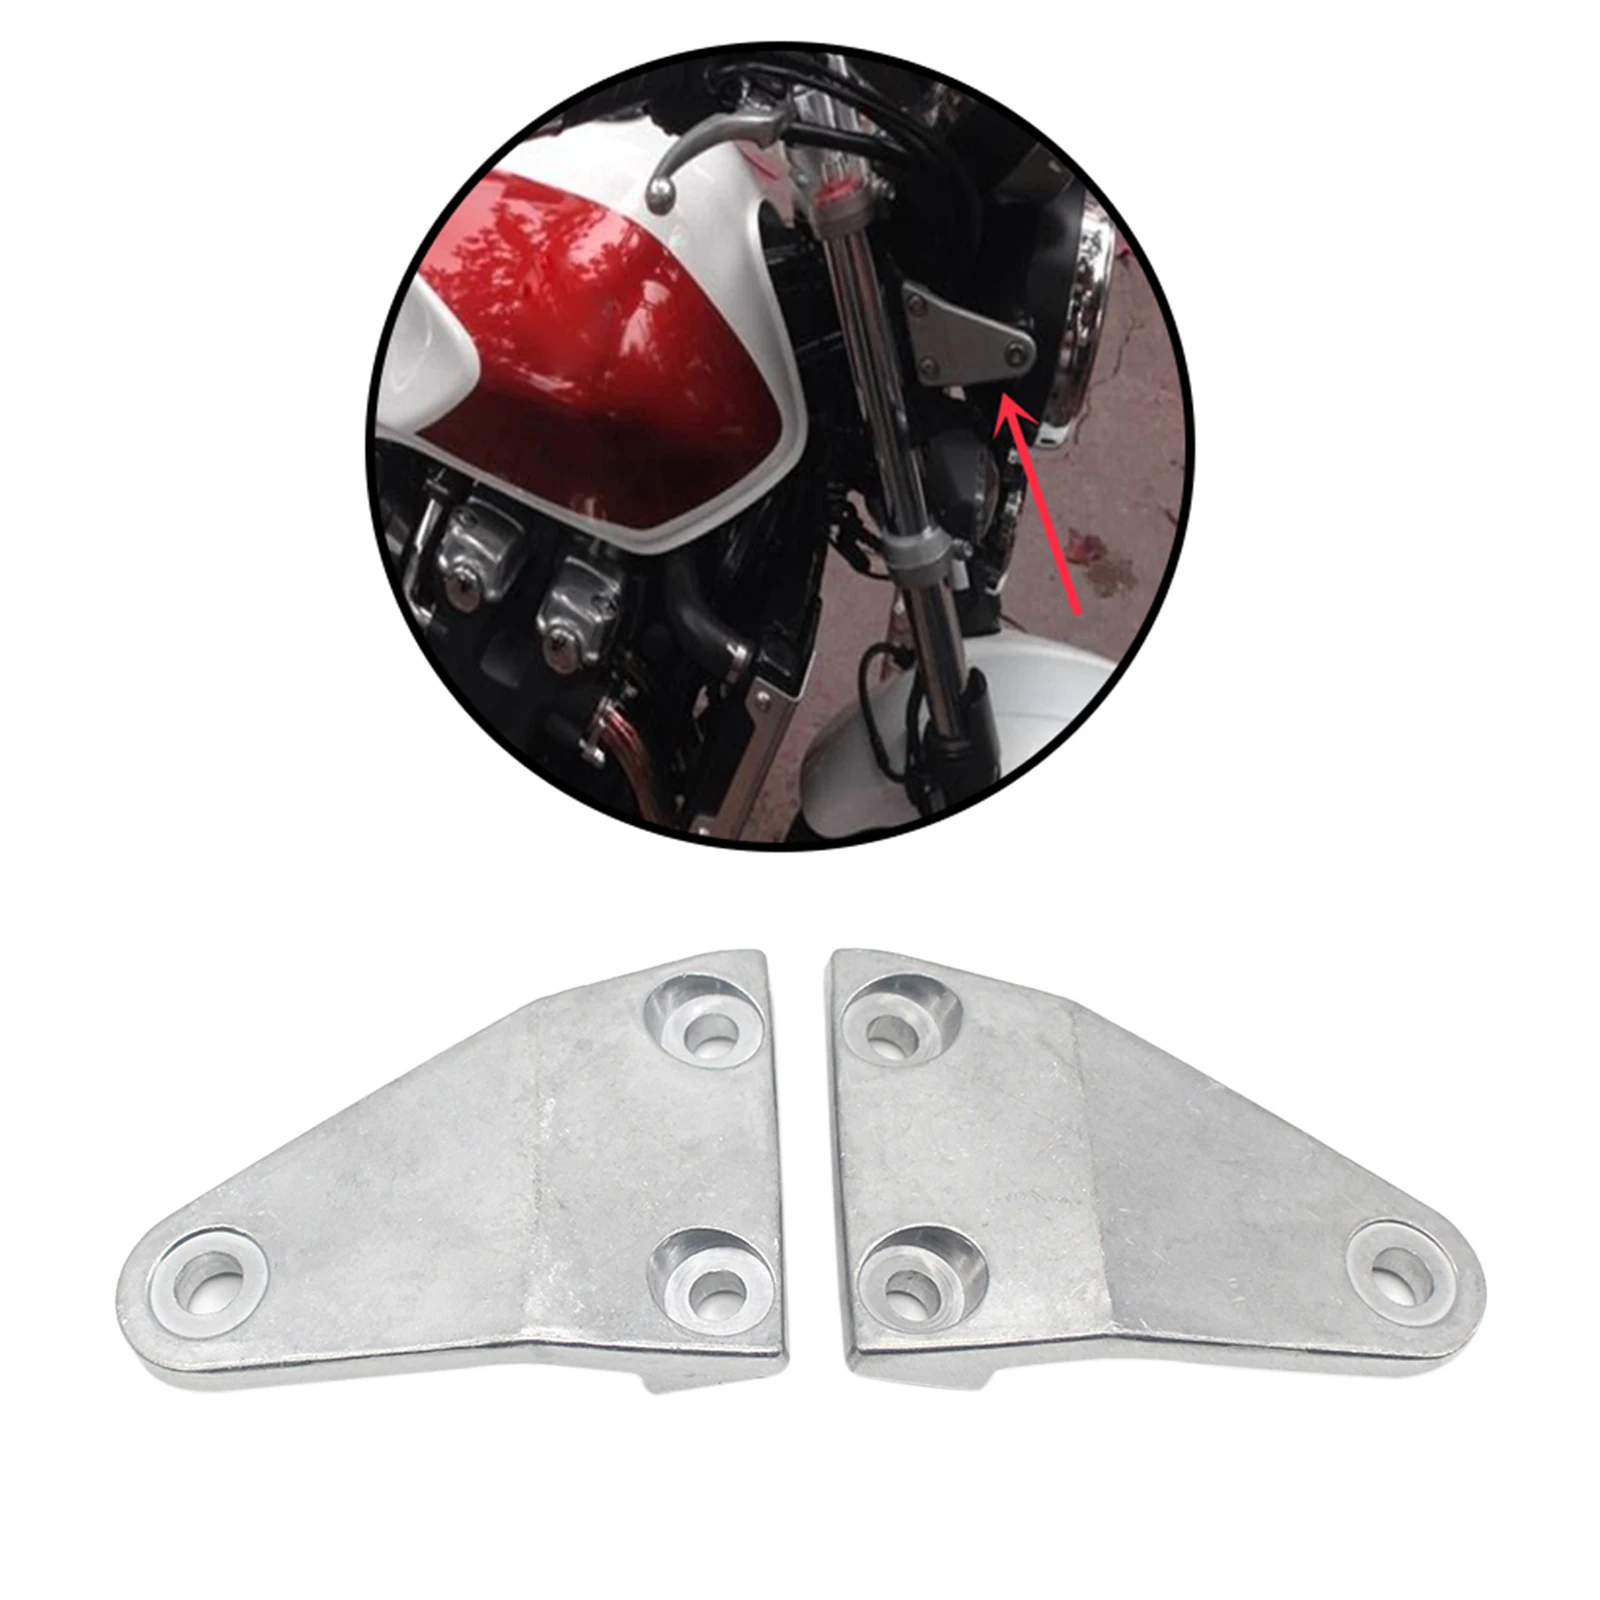 2Pcs Aluminum Headlight Lamp Mount Bracket headlamp fixed frame Replacement for Honda CB1300/CB400 Racer Silver